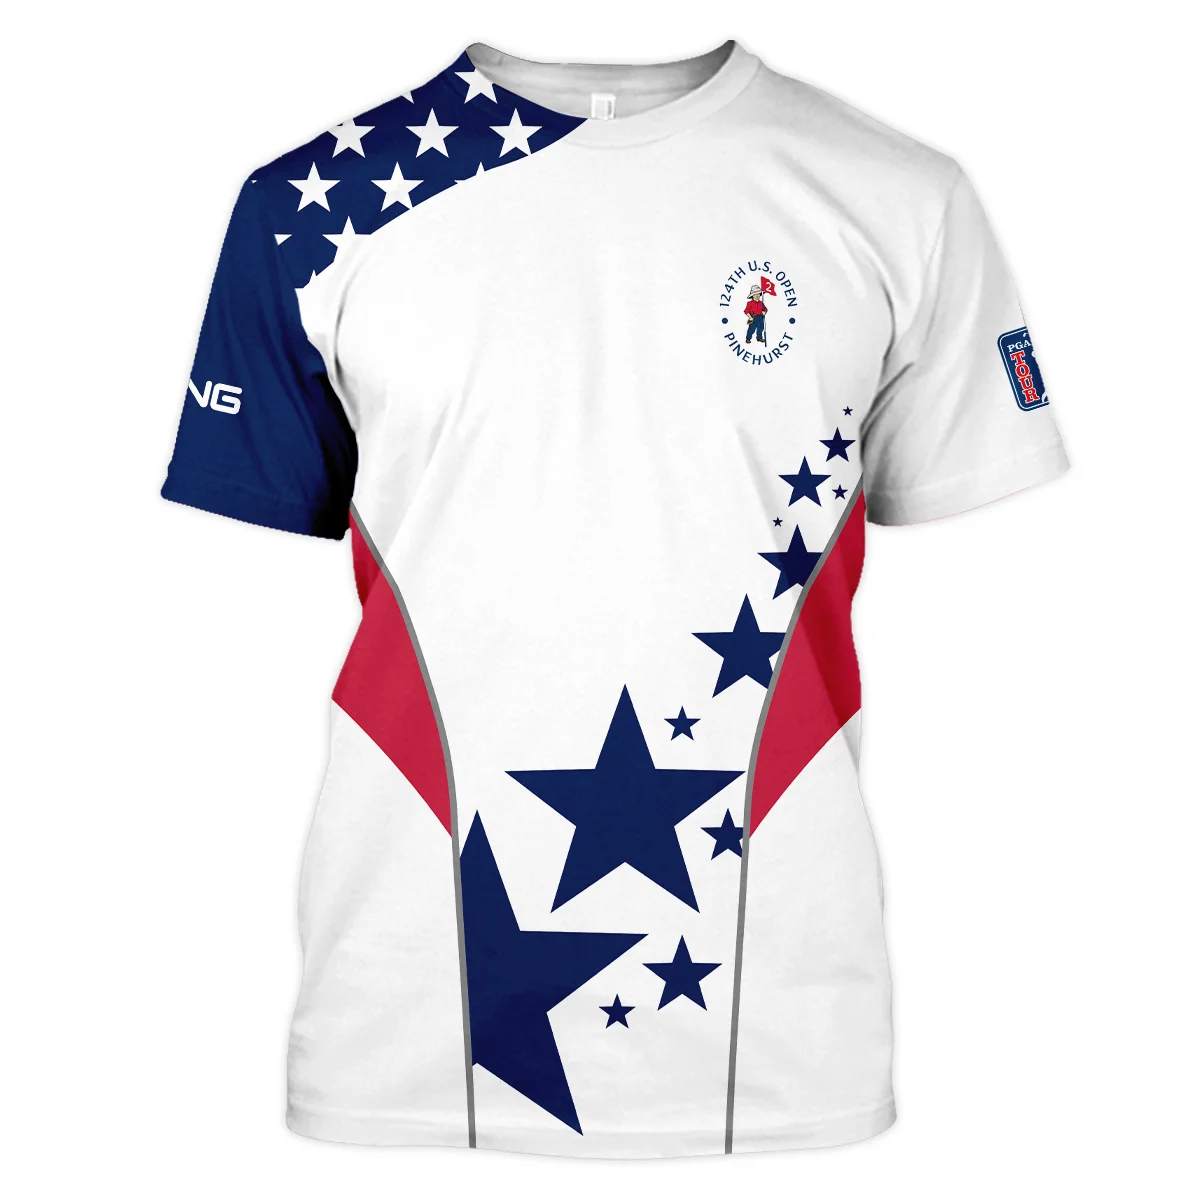 124th U.S. Open Pinehurst Ping Stars US Flag White Blue Zipper Polo Shirt Style Classic Zipper Polo Shirt For Men